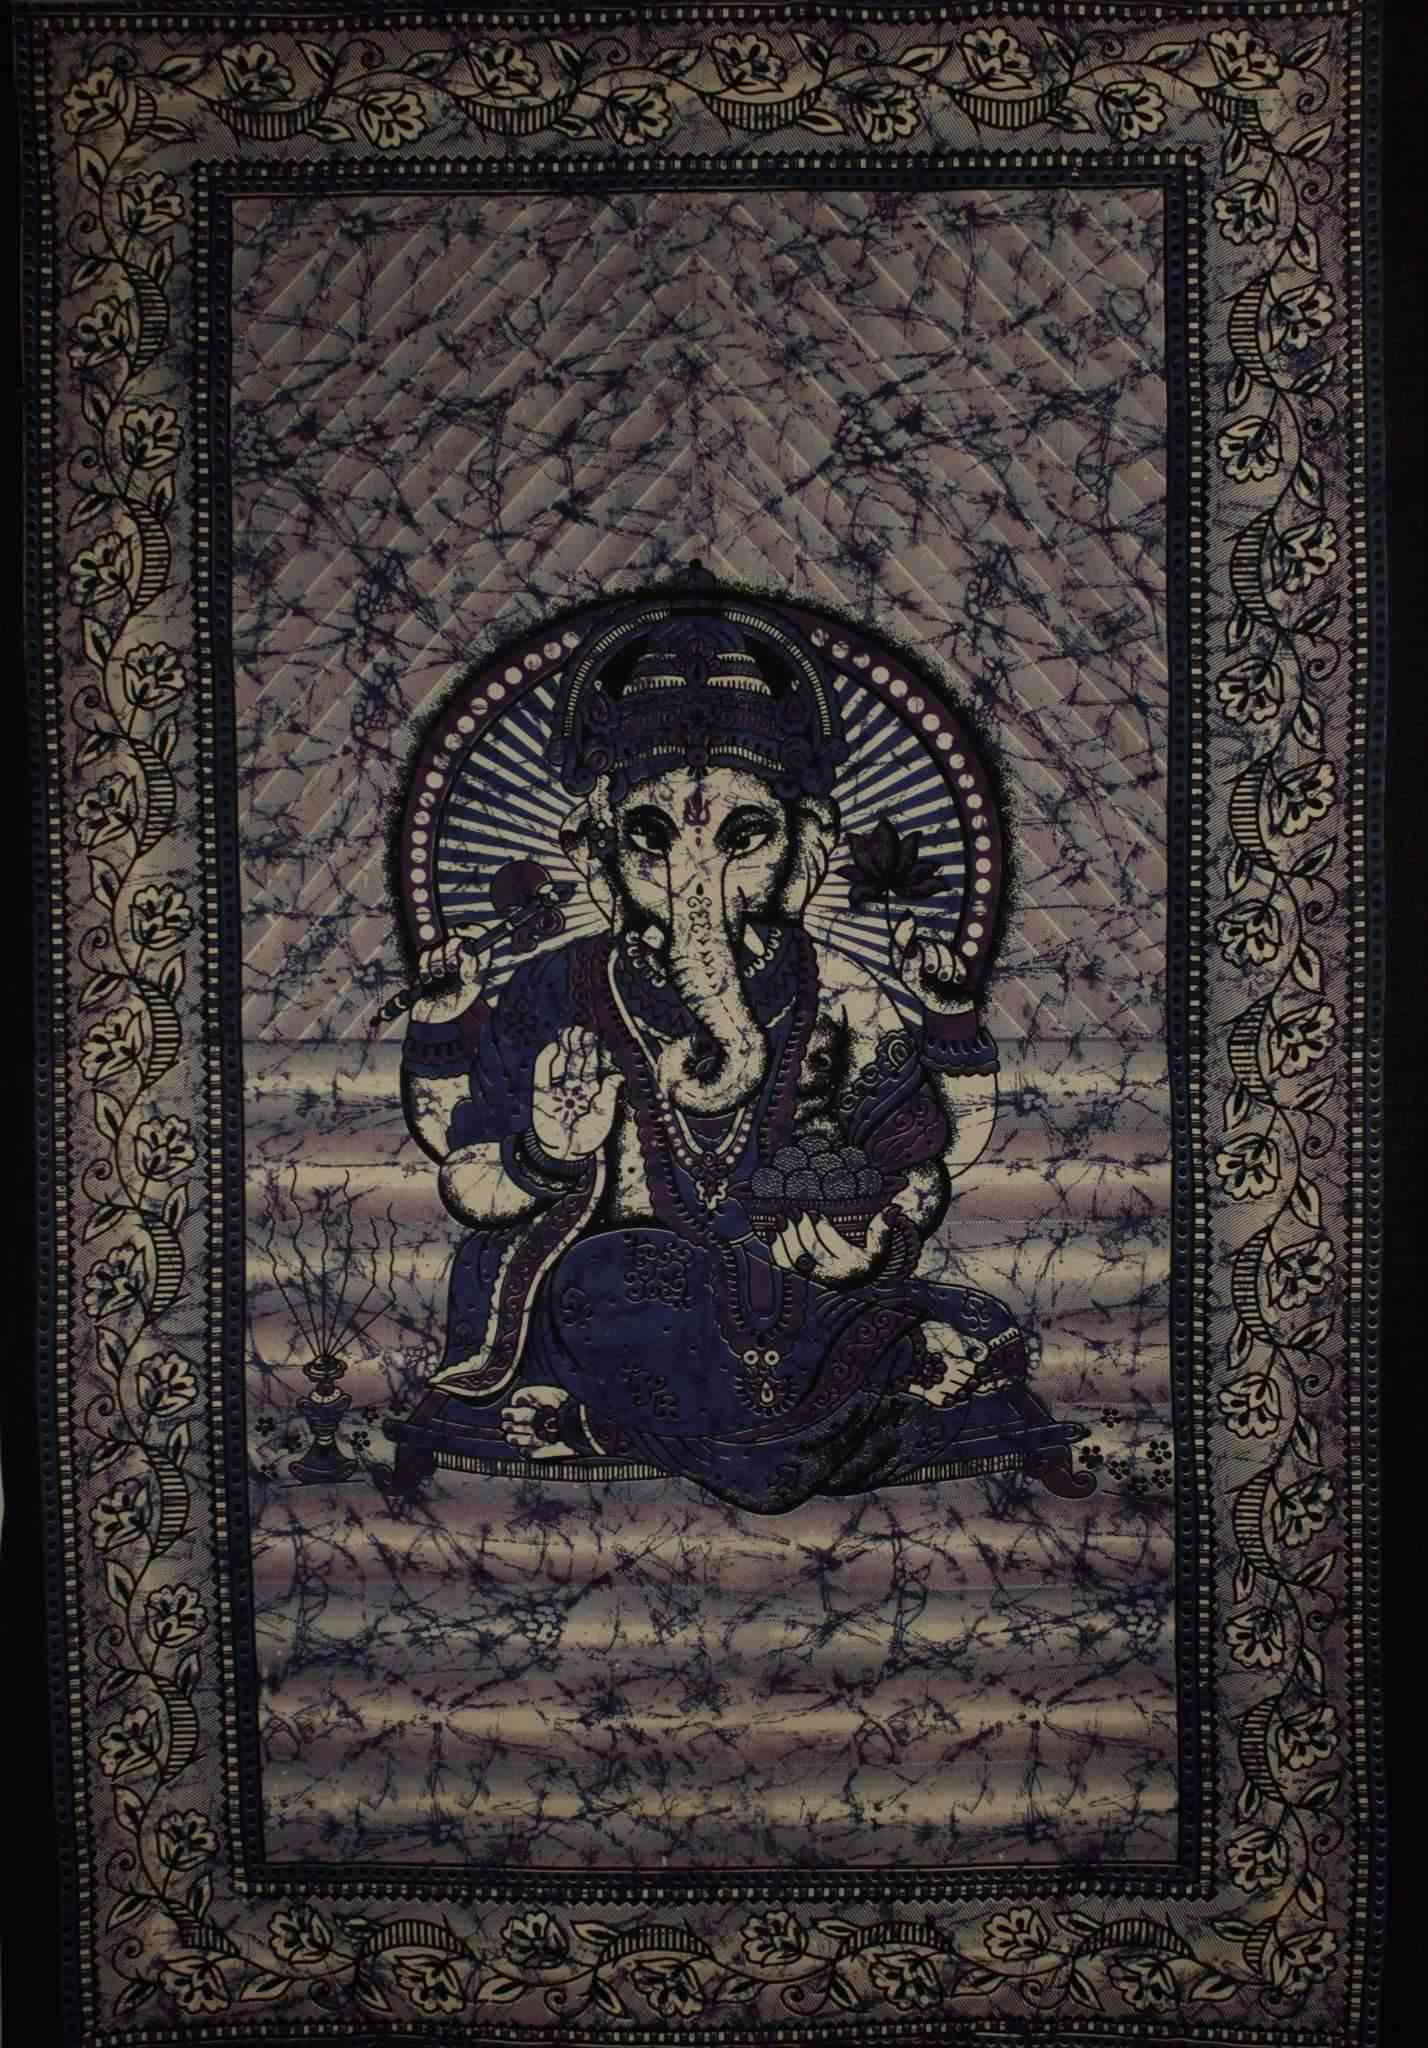 Ganesha Holding Lotus Flower In Batik Style Tapestry